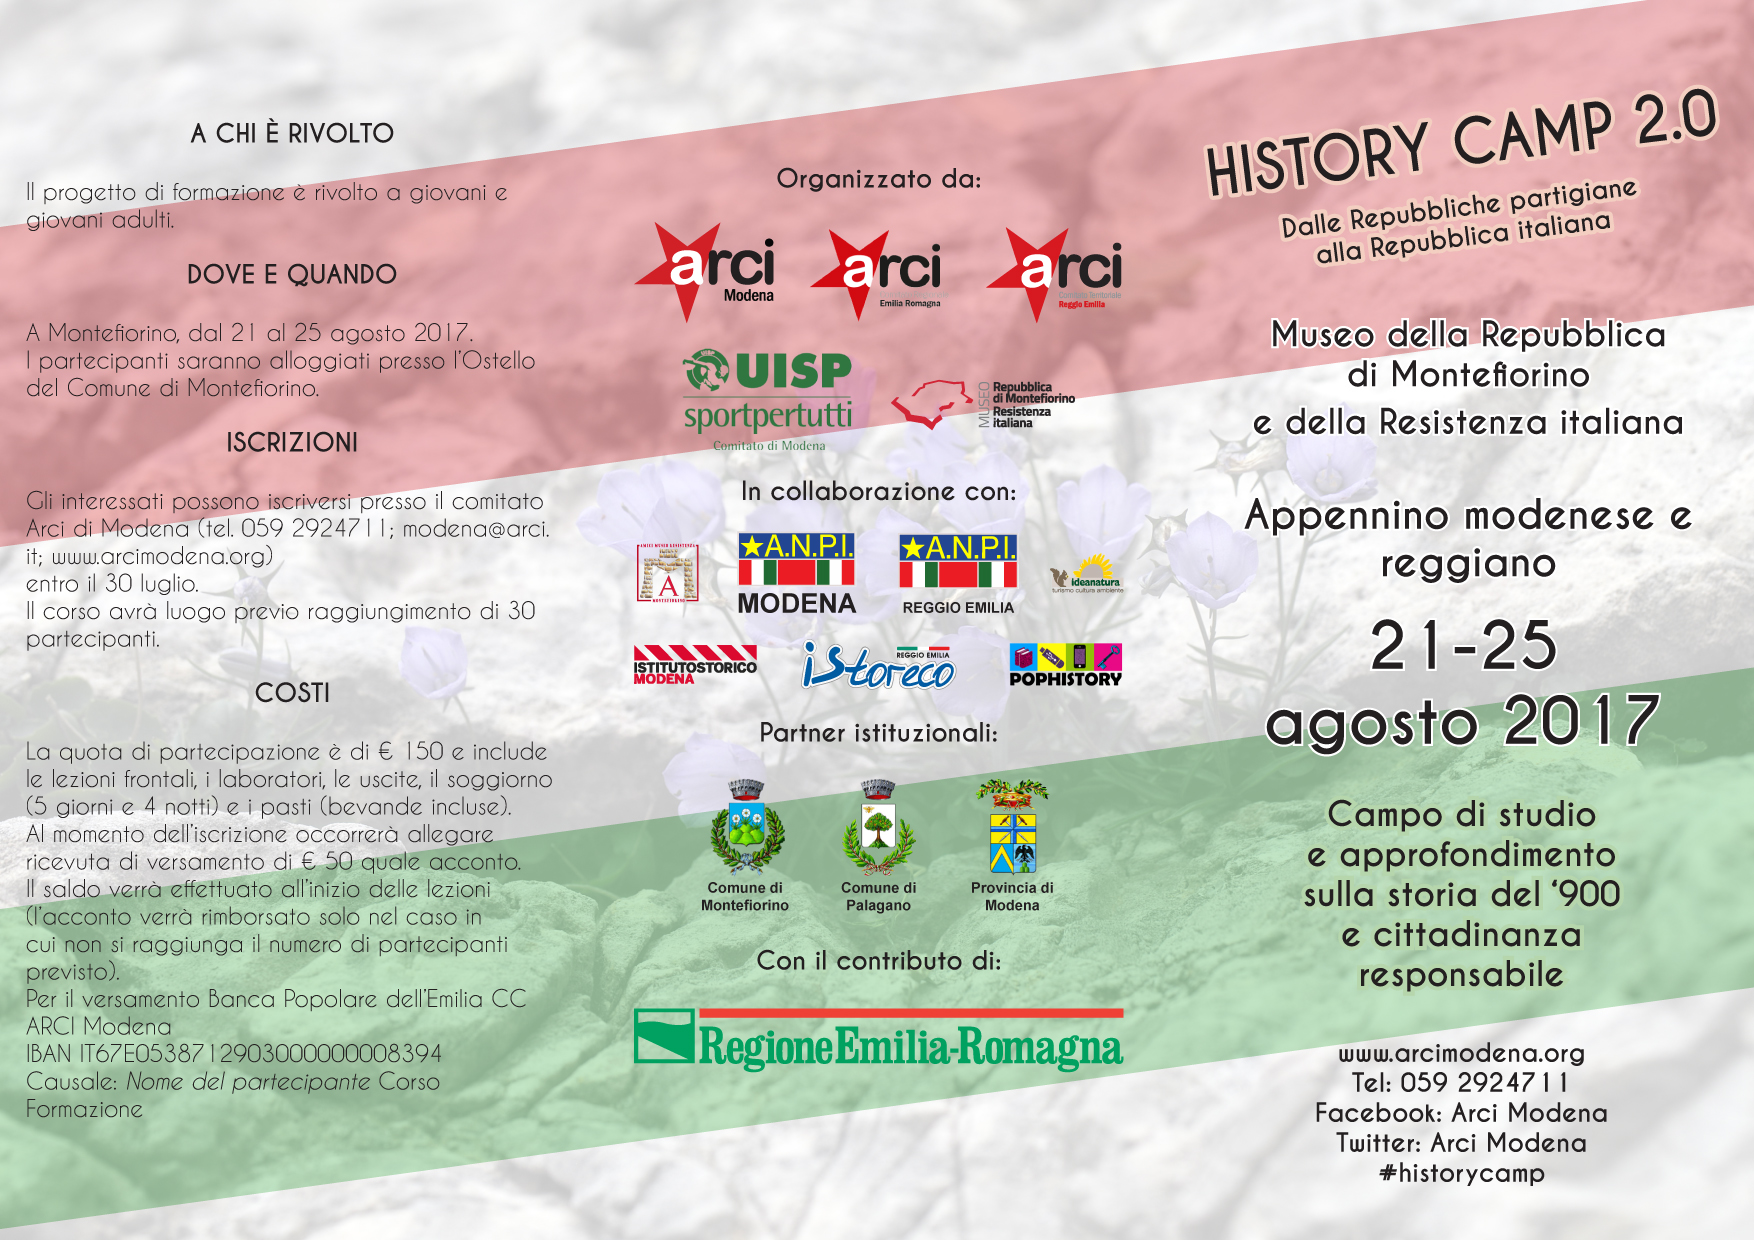 History camp 2.0 a Montefiorino